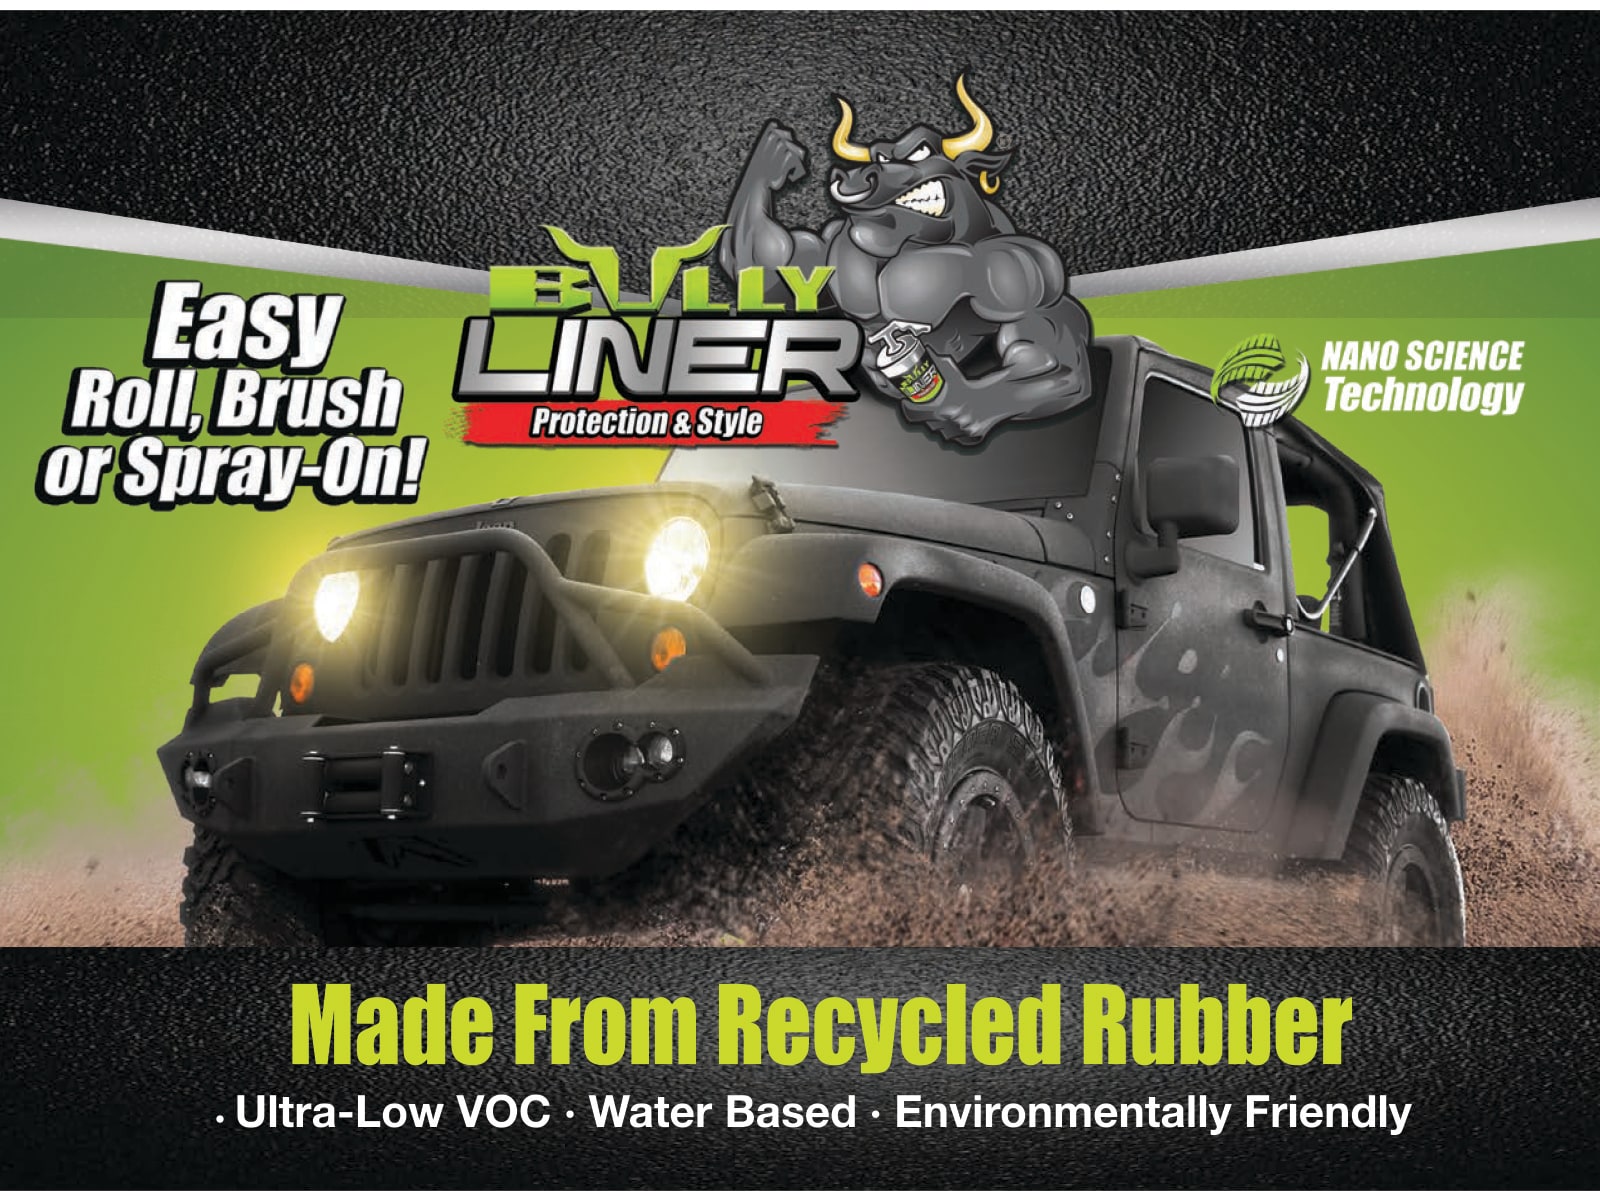 HERCULINER Black 1-Gallon Truck Bed Liner Kit, Polyurethane, Roller  Included, Skid-Resistant, Rust Prevention